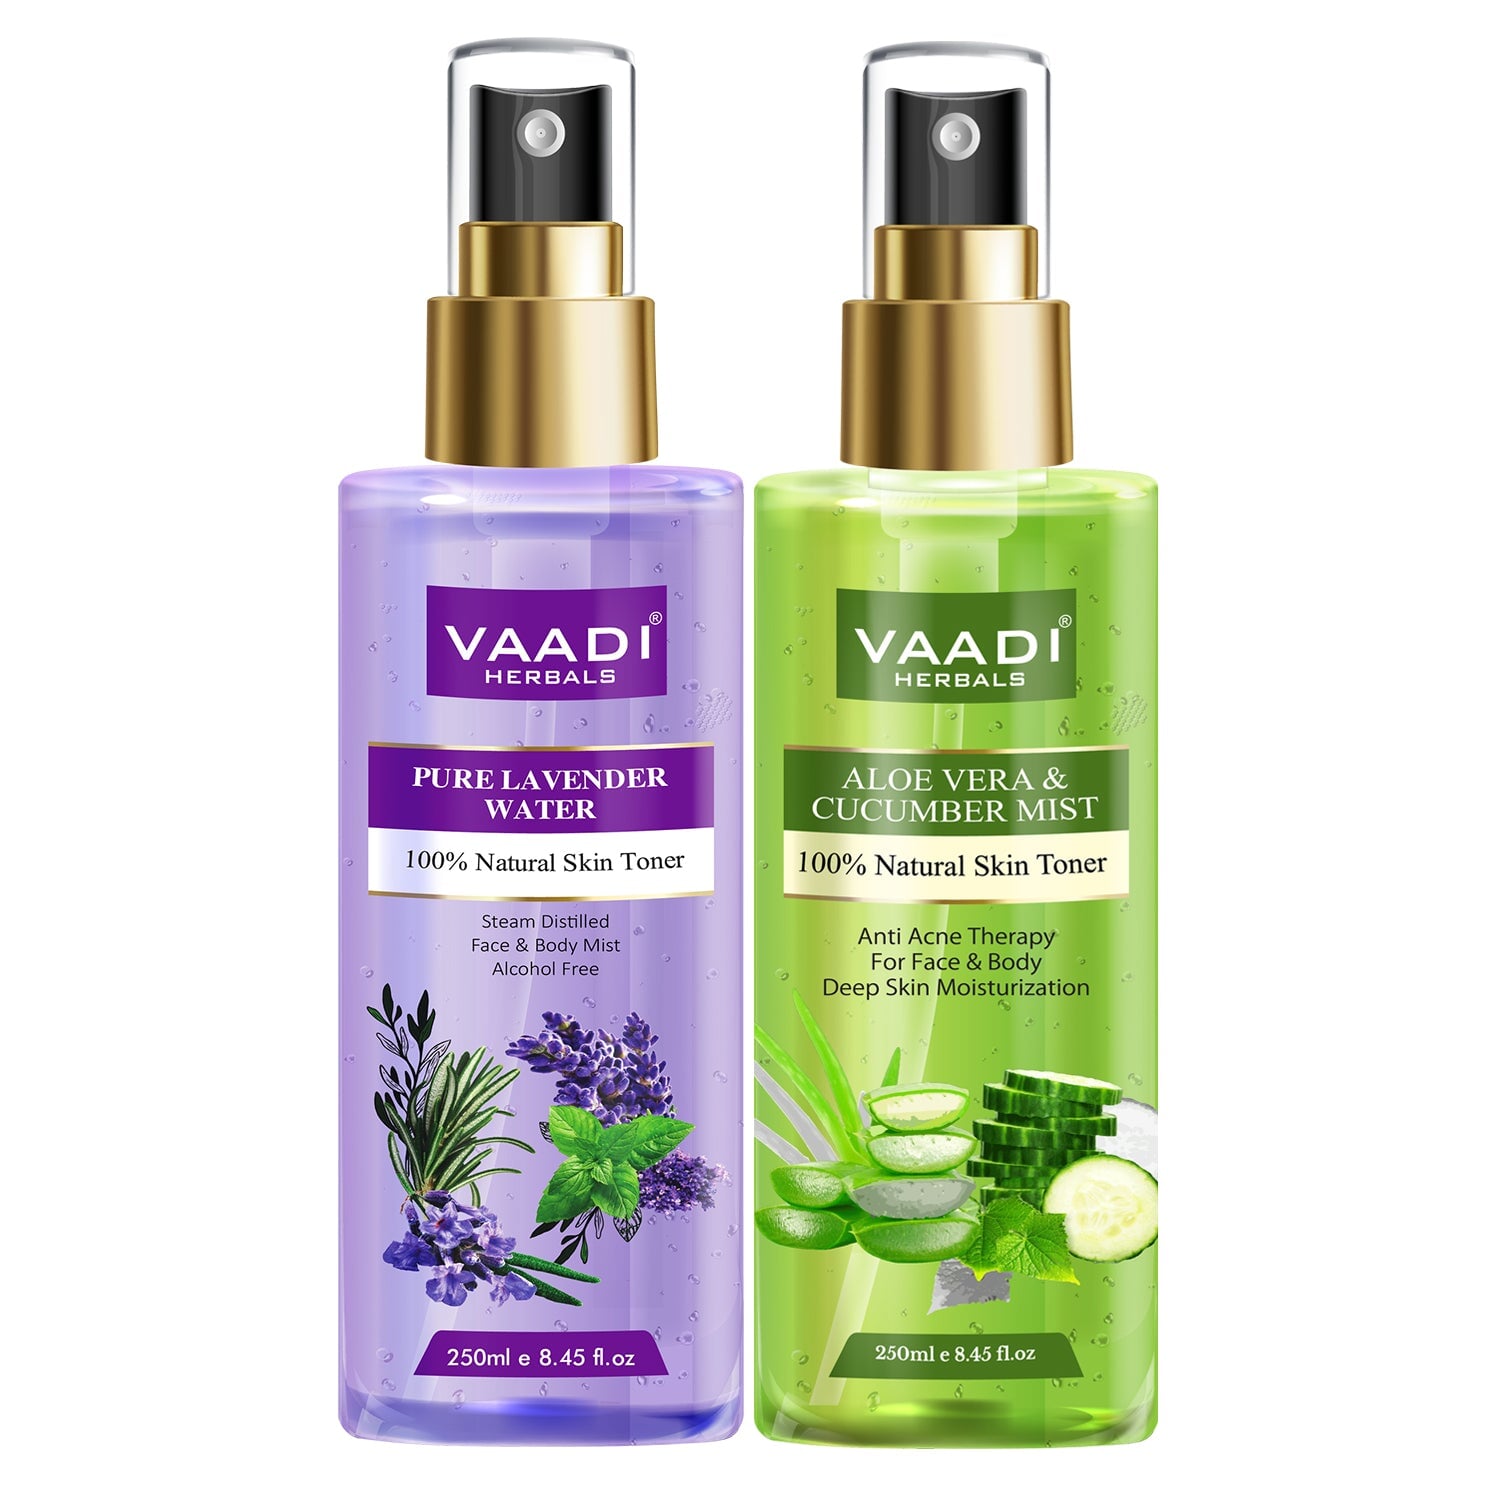 Pack of 2 Skin Toners - Lavender Water and Aloe Vera & Cucumber Mist - 100% Natural & Pure (2 x 250 ml / 8.5 fl oz)